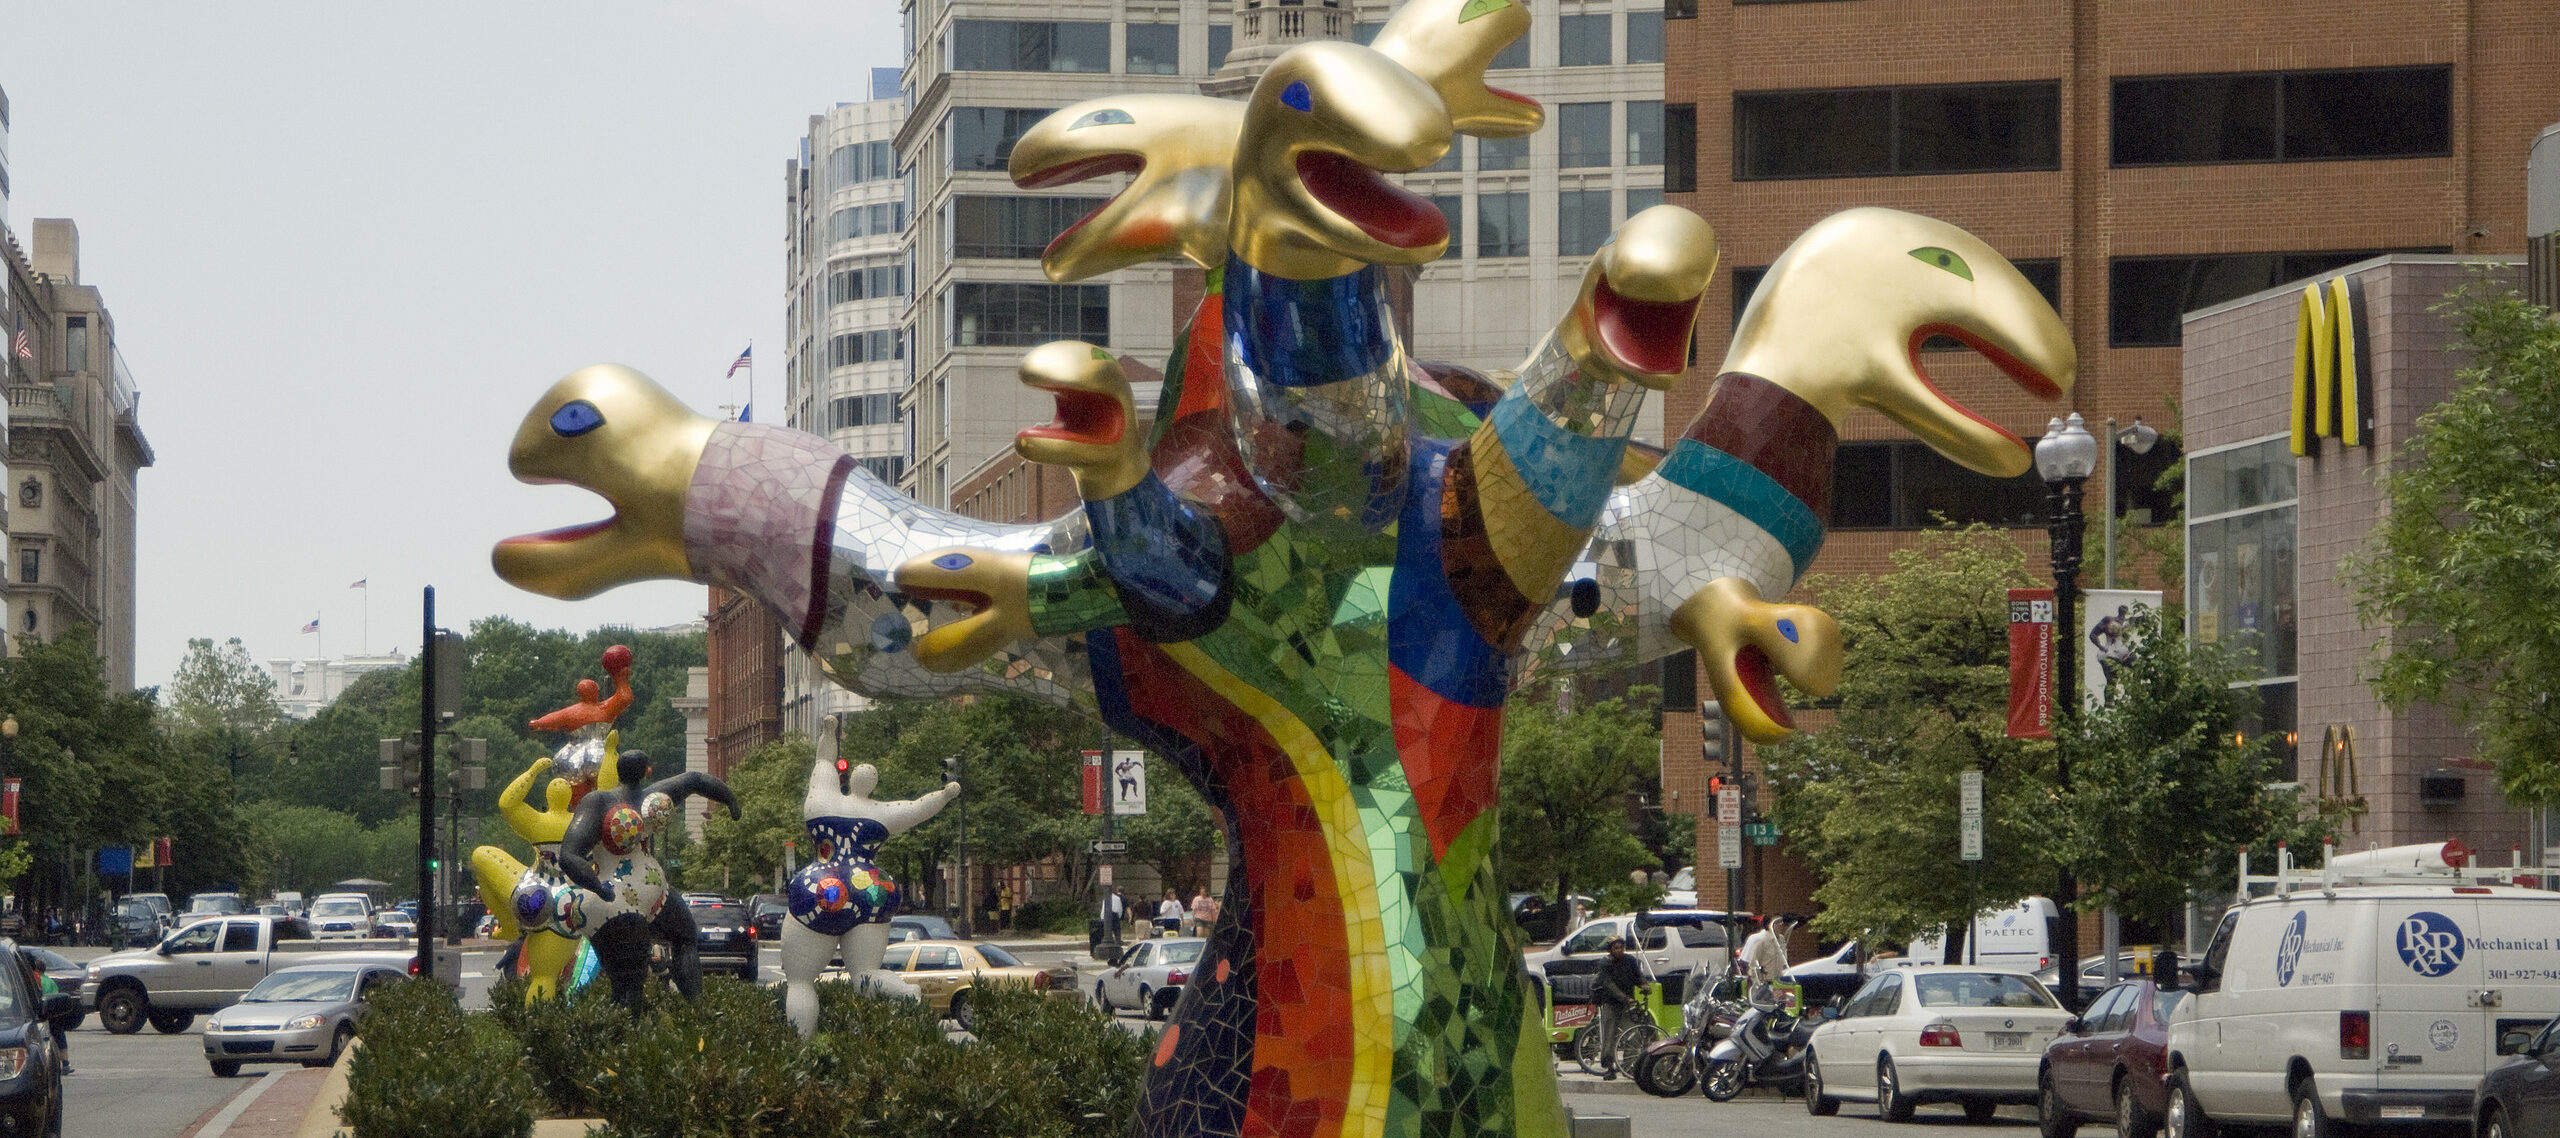 A multi-headed rainbow color snake sculpture.